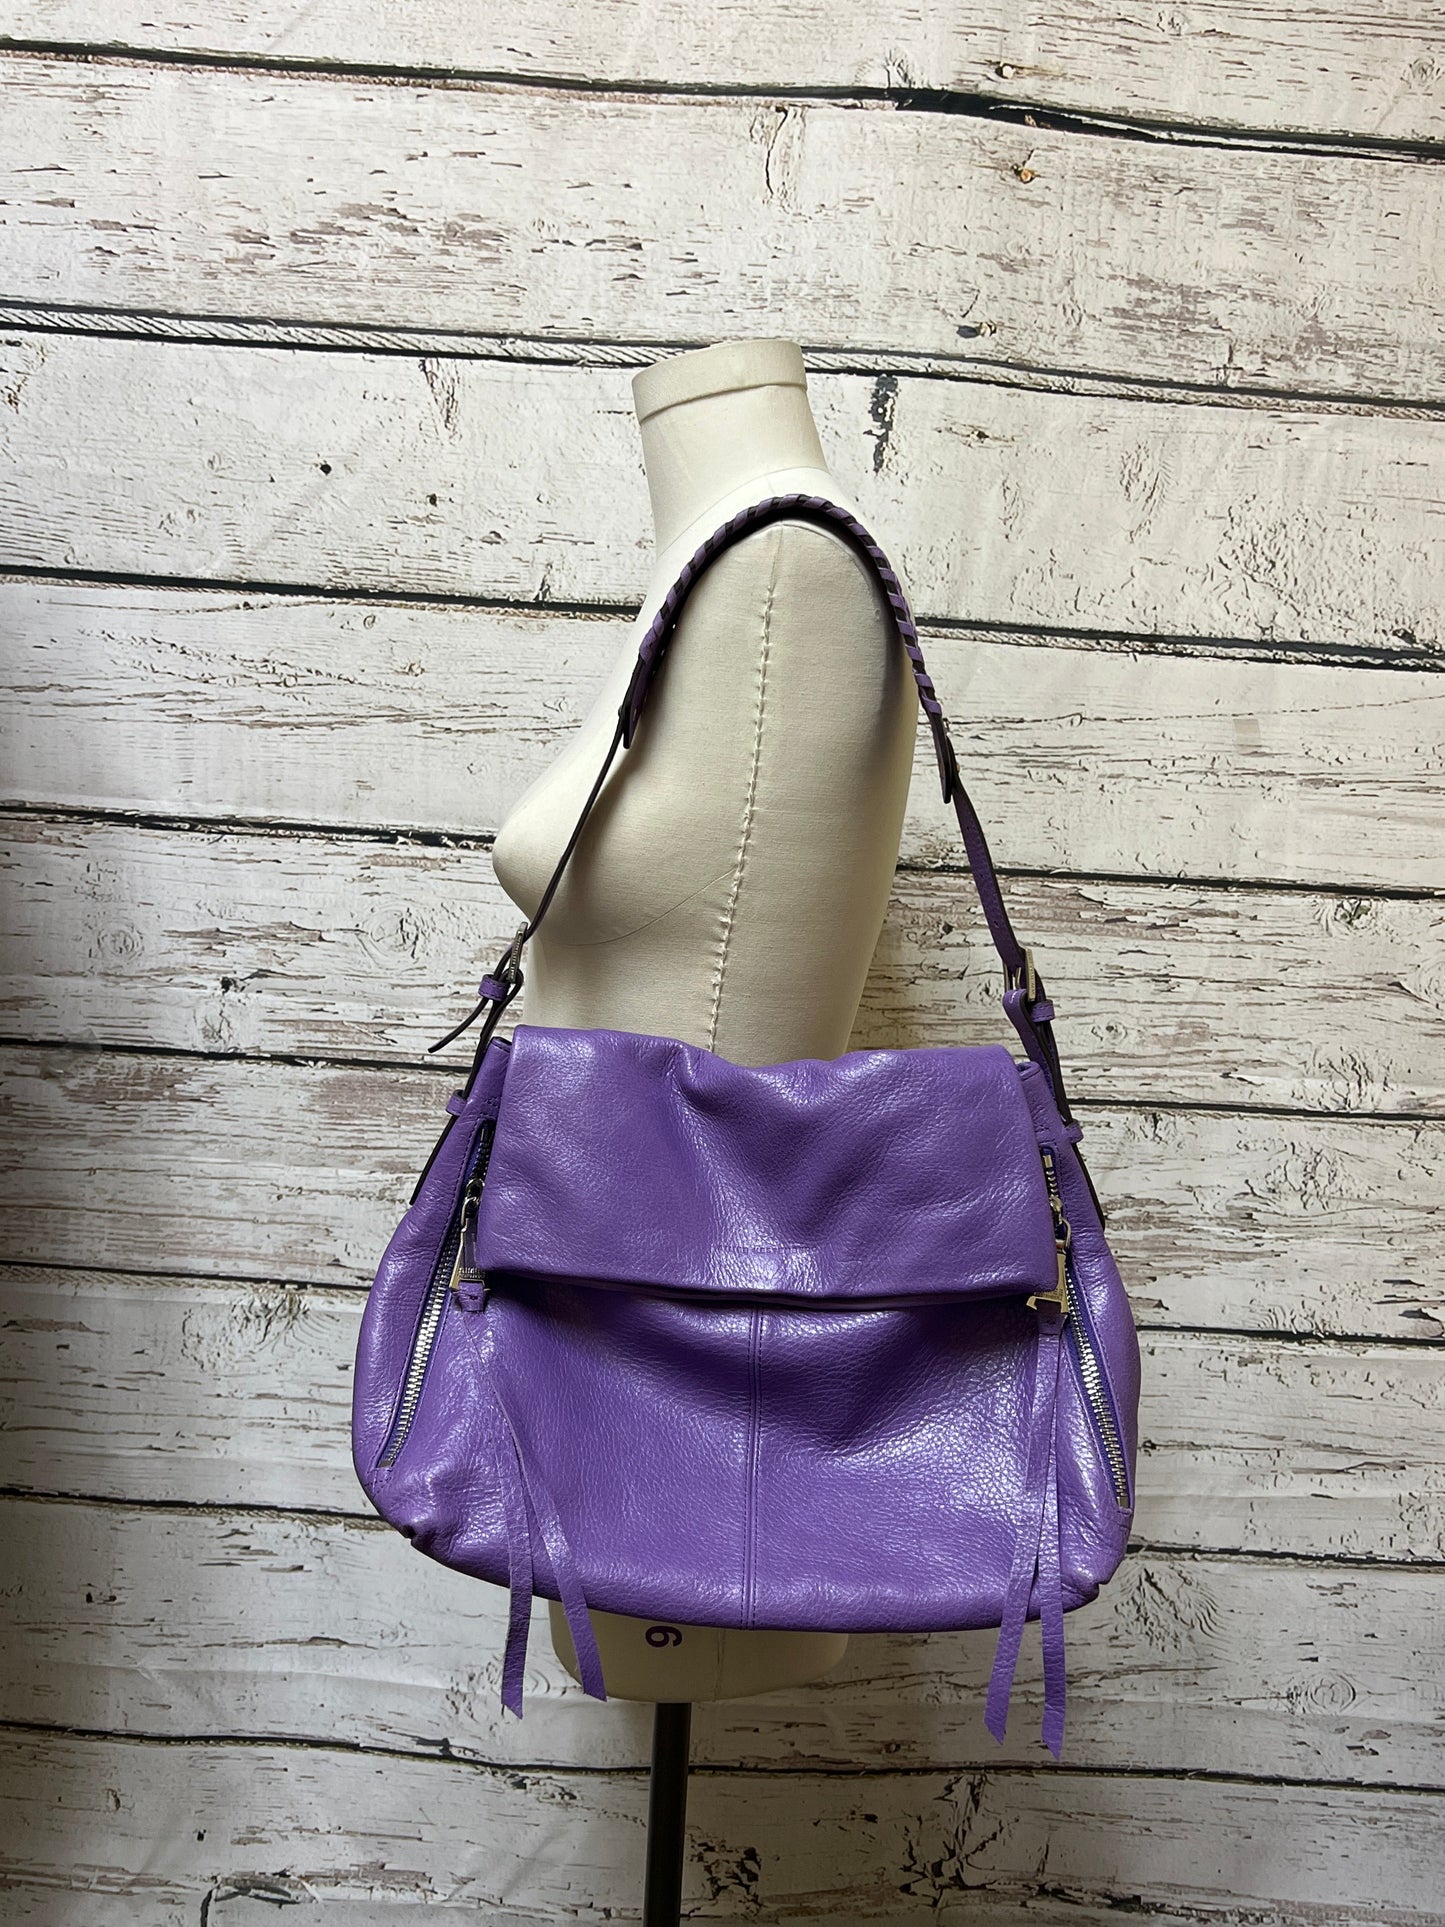 Handbag Designer By Aimee Kestenberg  Size: Large